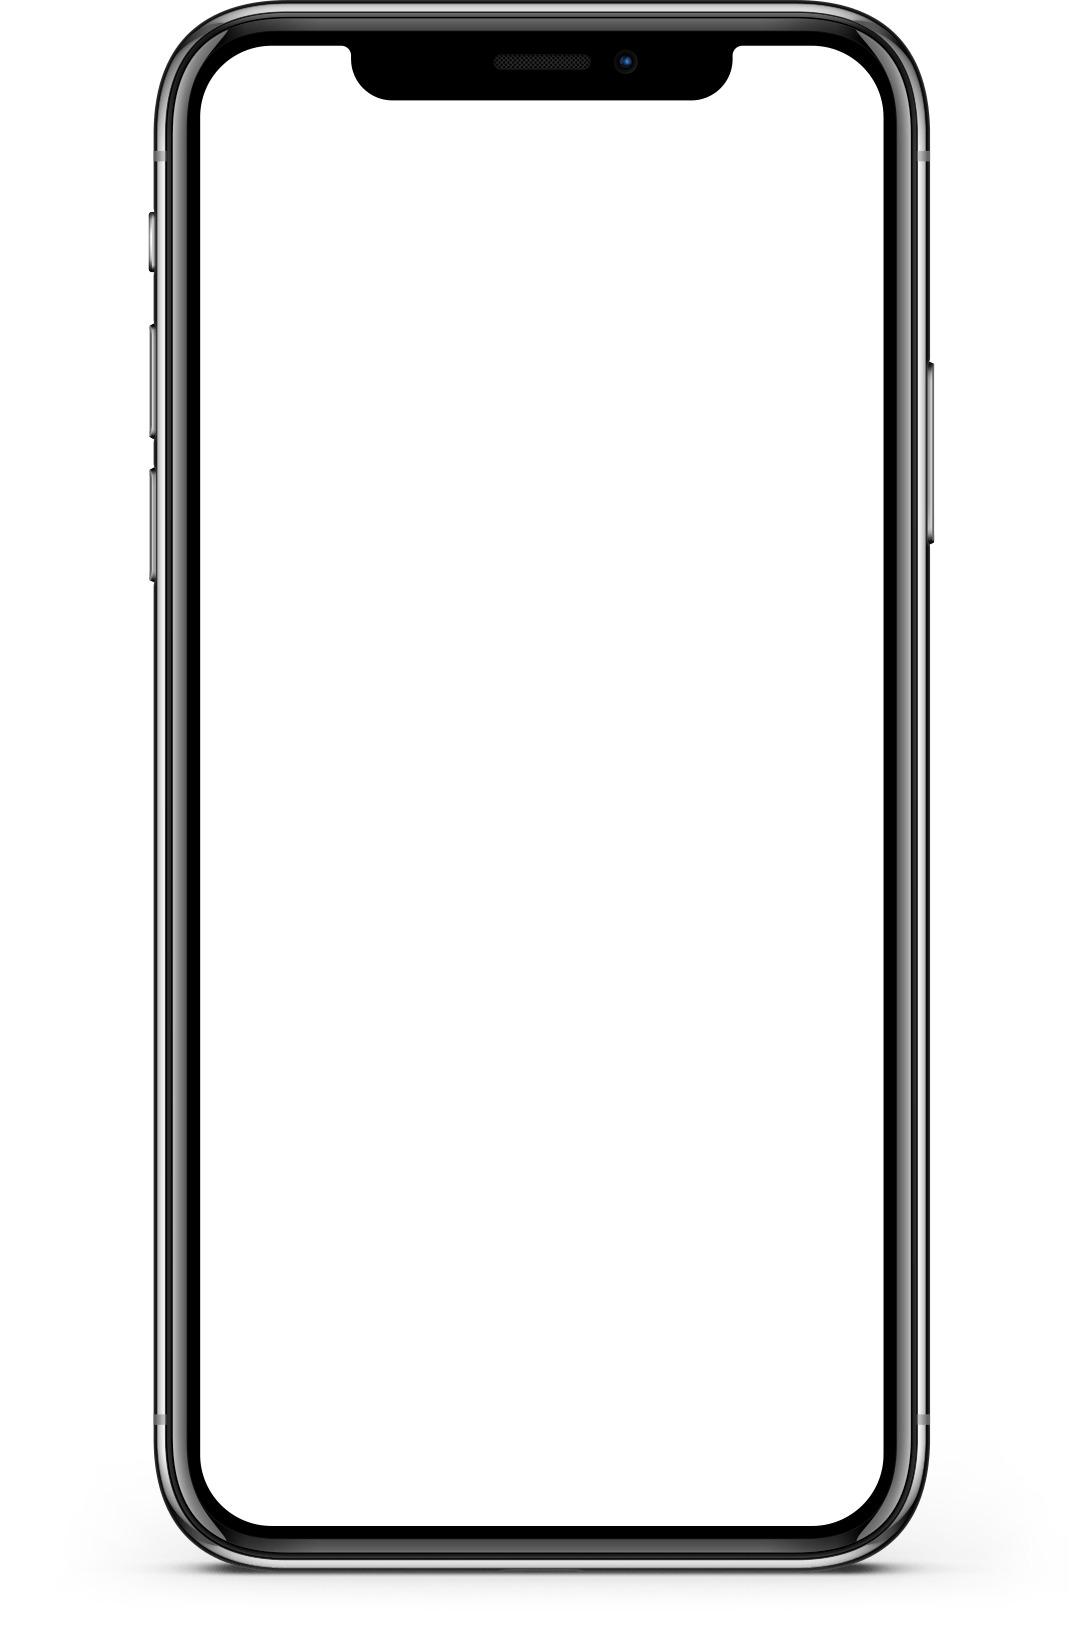 Iphone X Screen Mockup png transparent